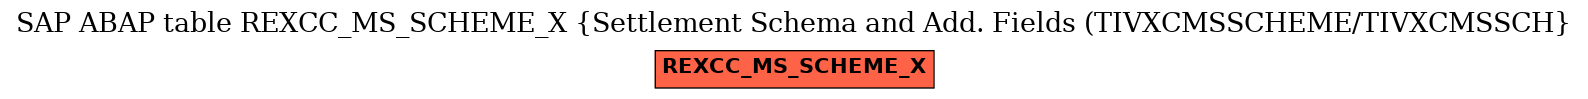 E-R Diagram for table REXCC_MS_SCHEME_X (Settlement Schema and Add. Fields (TIVXCMSSCHEME/TIVXCMSSCH)